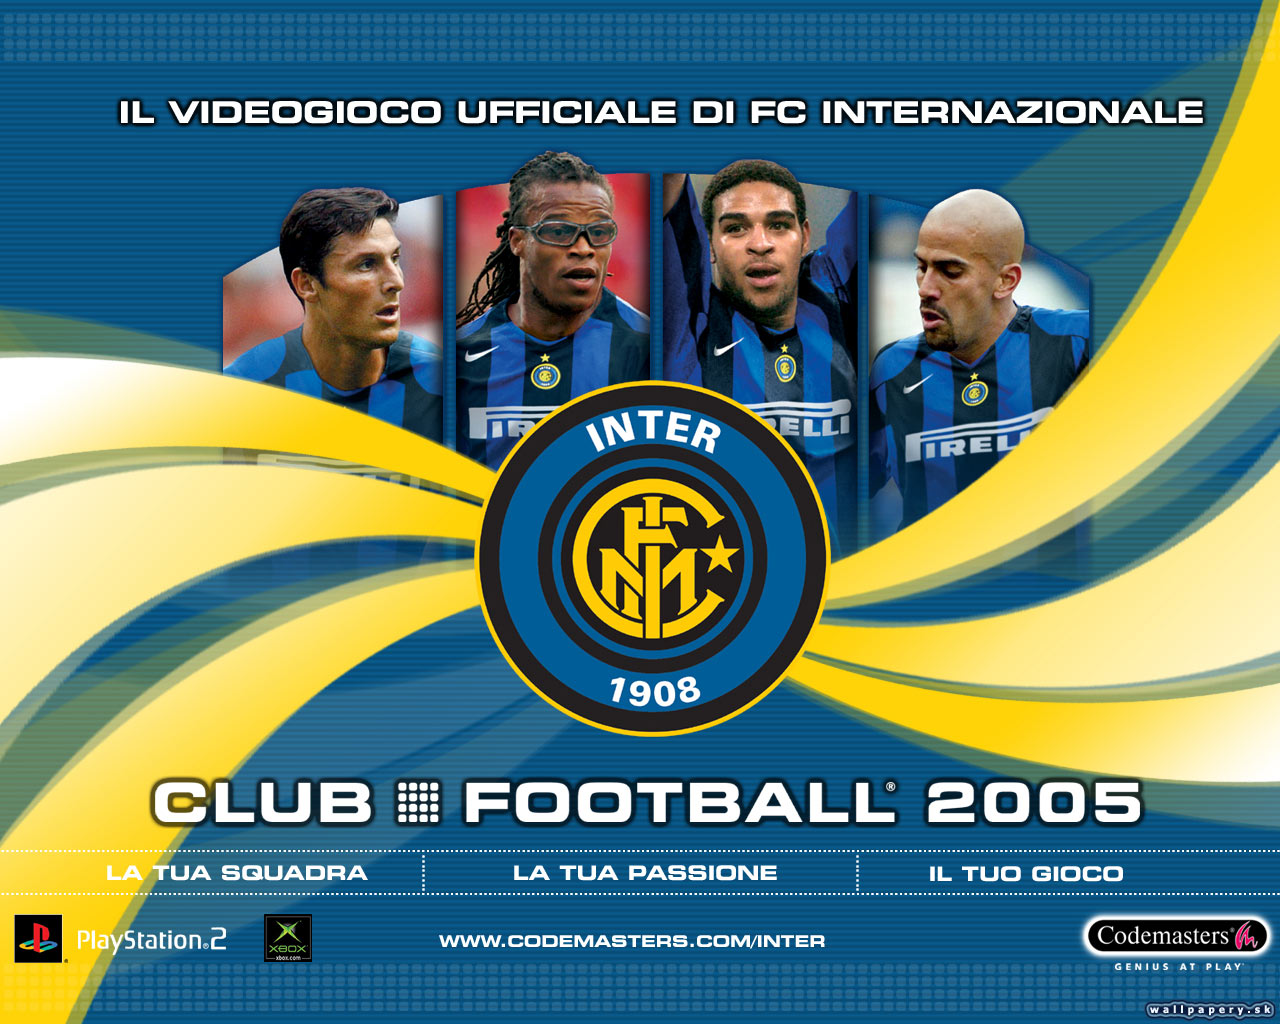 Club Football 2005 - wallpaper 13